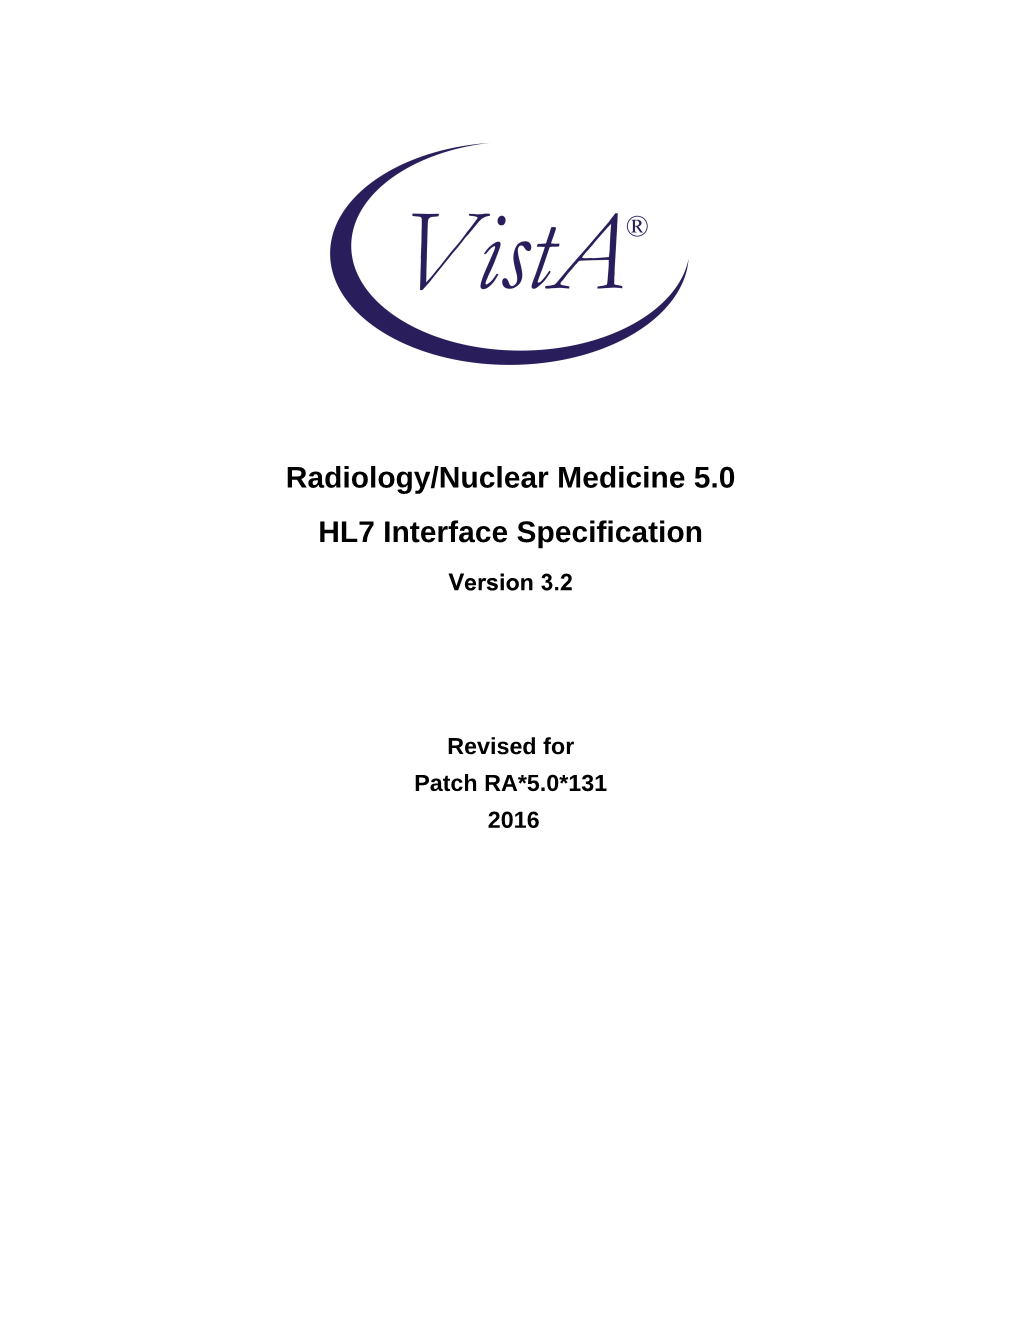 HL7 V2.4 Interface Specification for Patch 107